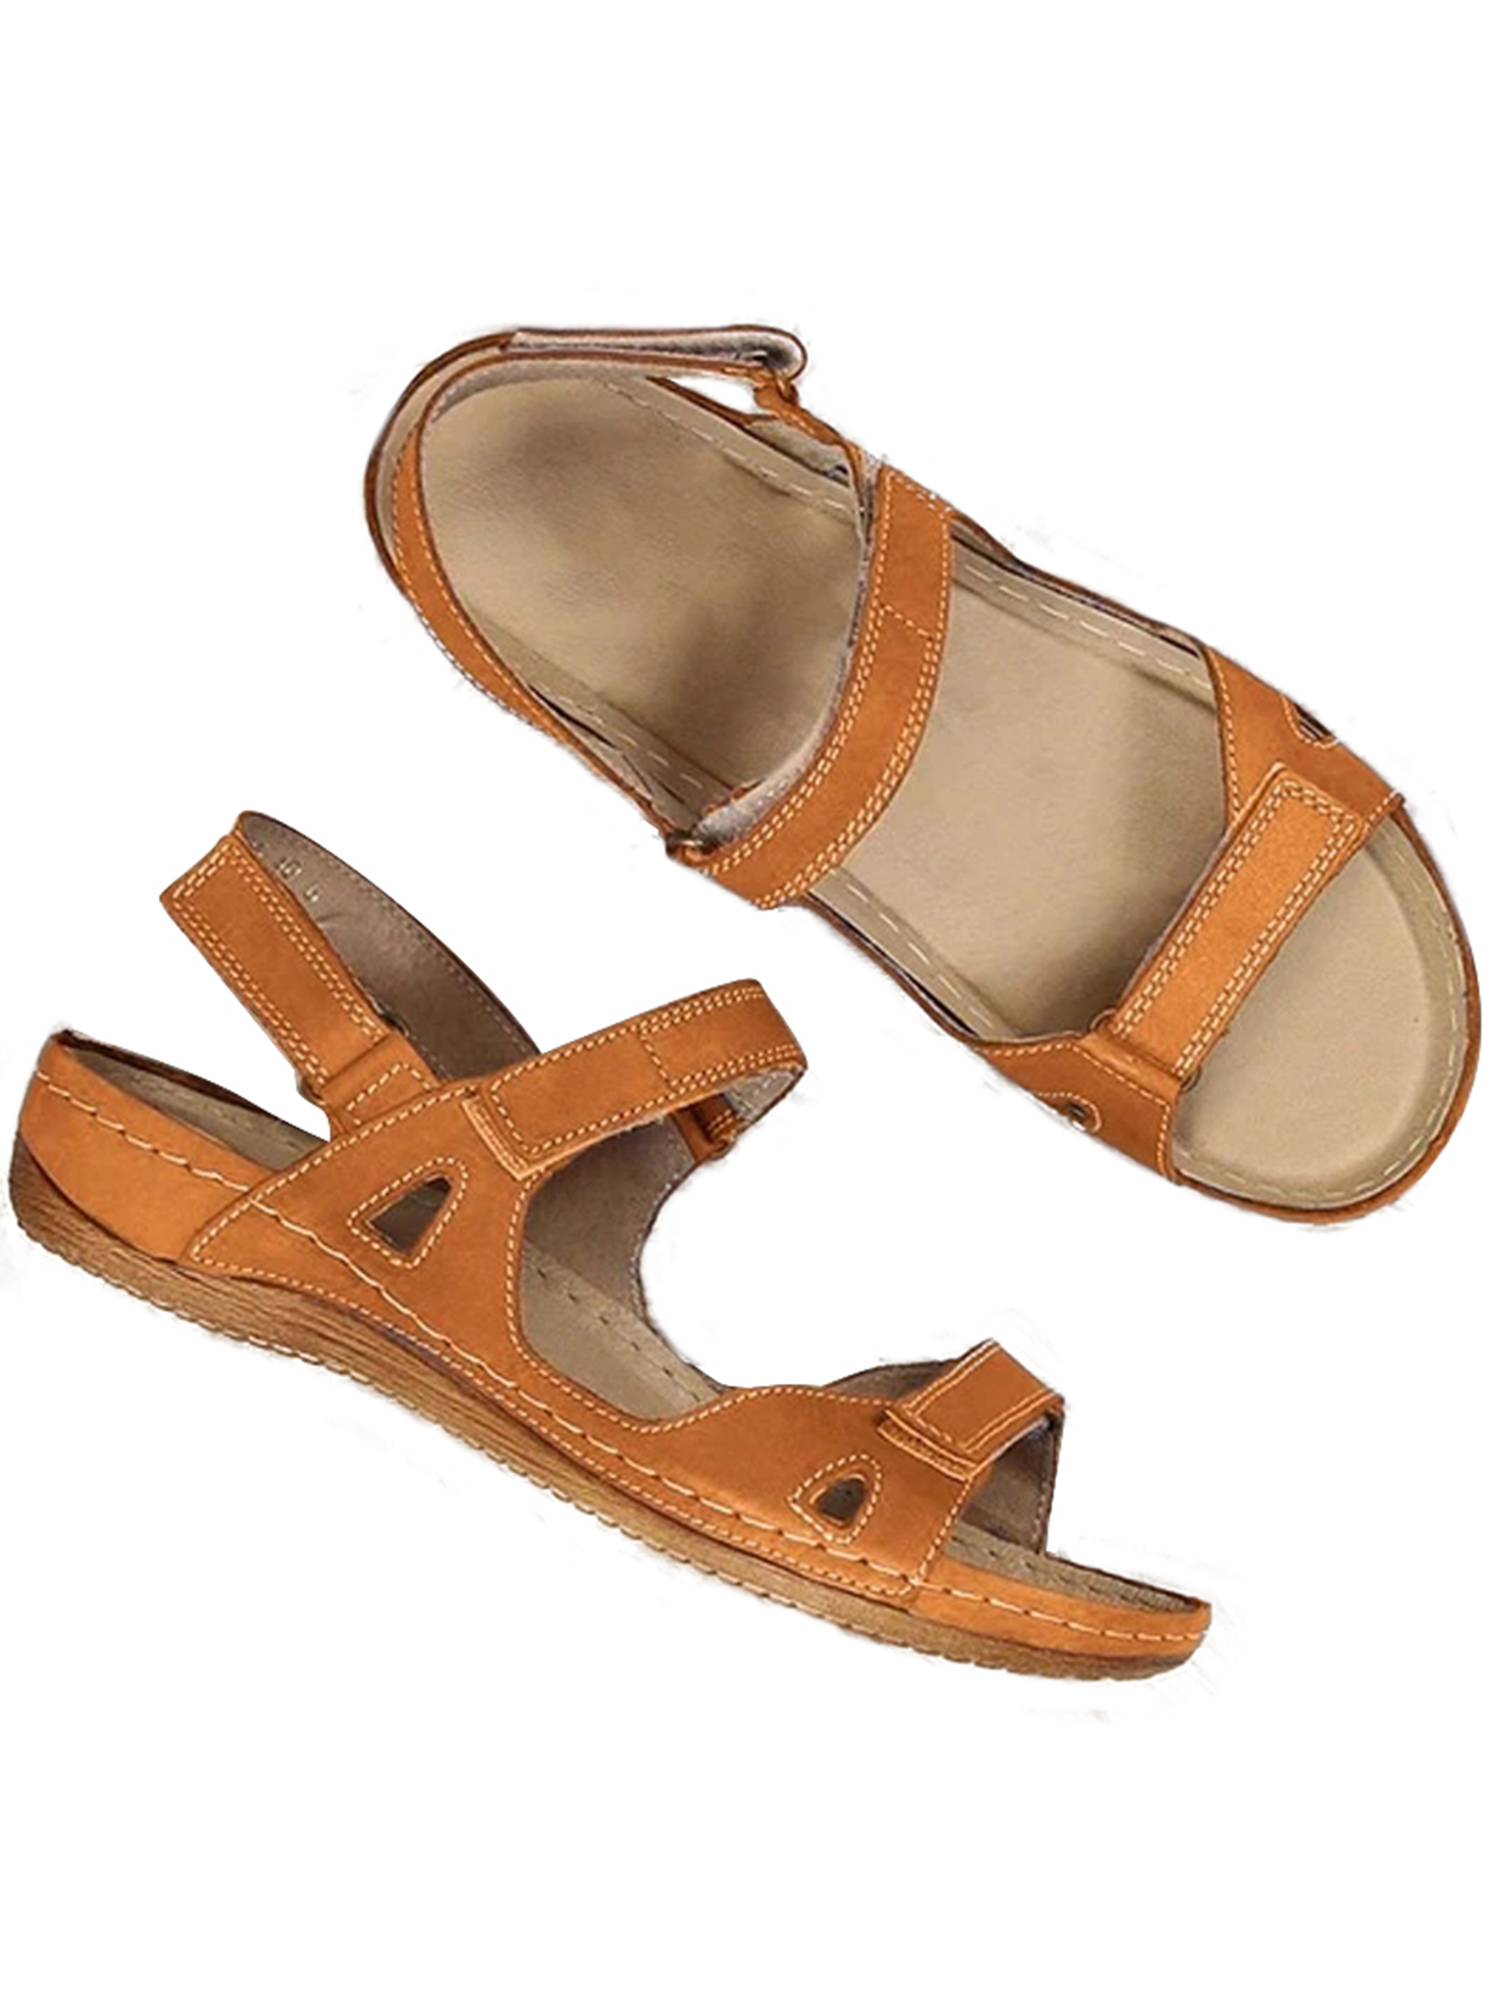 Womens Summer Boho Flip Flops Sandal Cross T Strap Thong Flat Casual Shoes Size - image 3 of 3